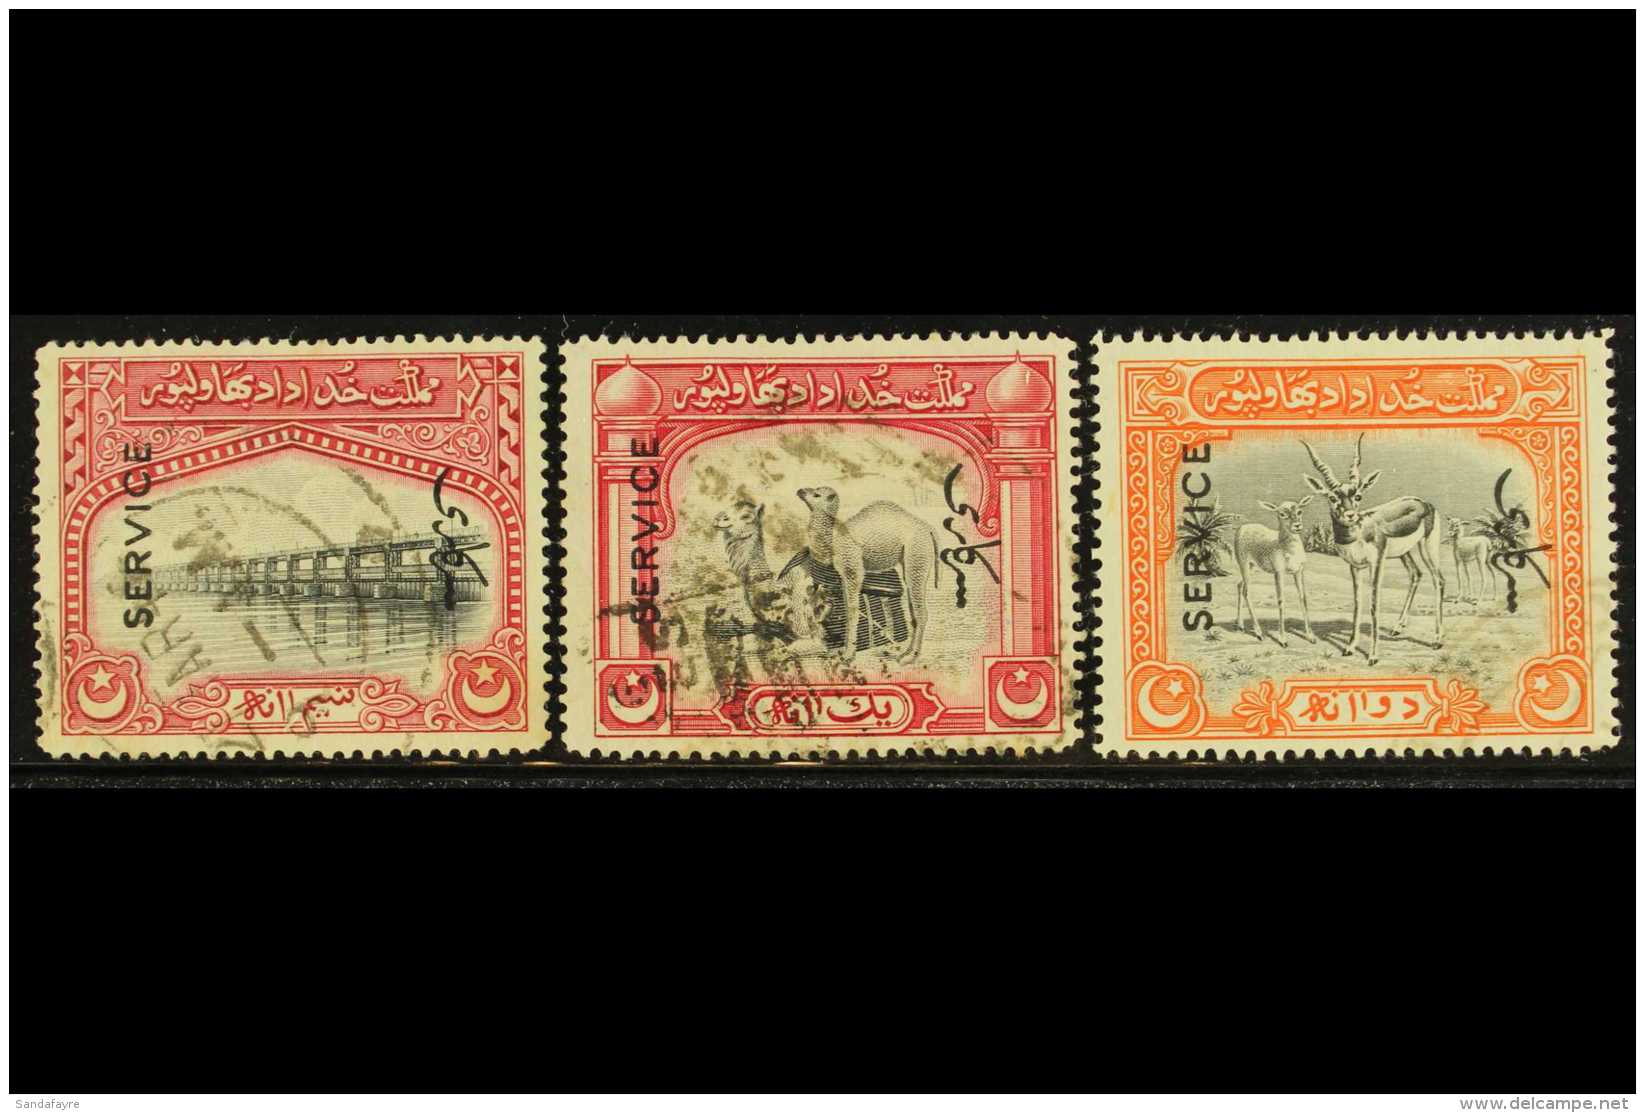 OFFICIAL  1945 (June) Vertical Overprint Set, SG O14/16, Fine Used. (3 Stamps) For More Images, Please Visit... - Bahawalpur